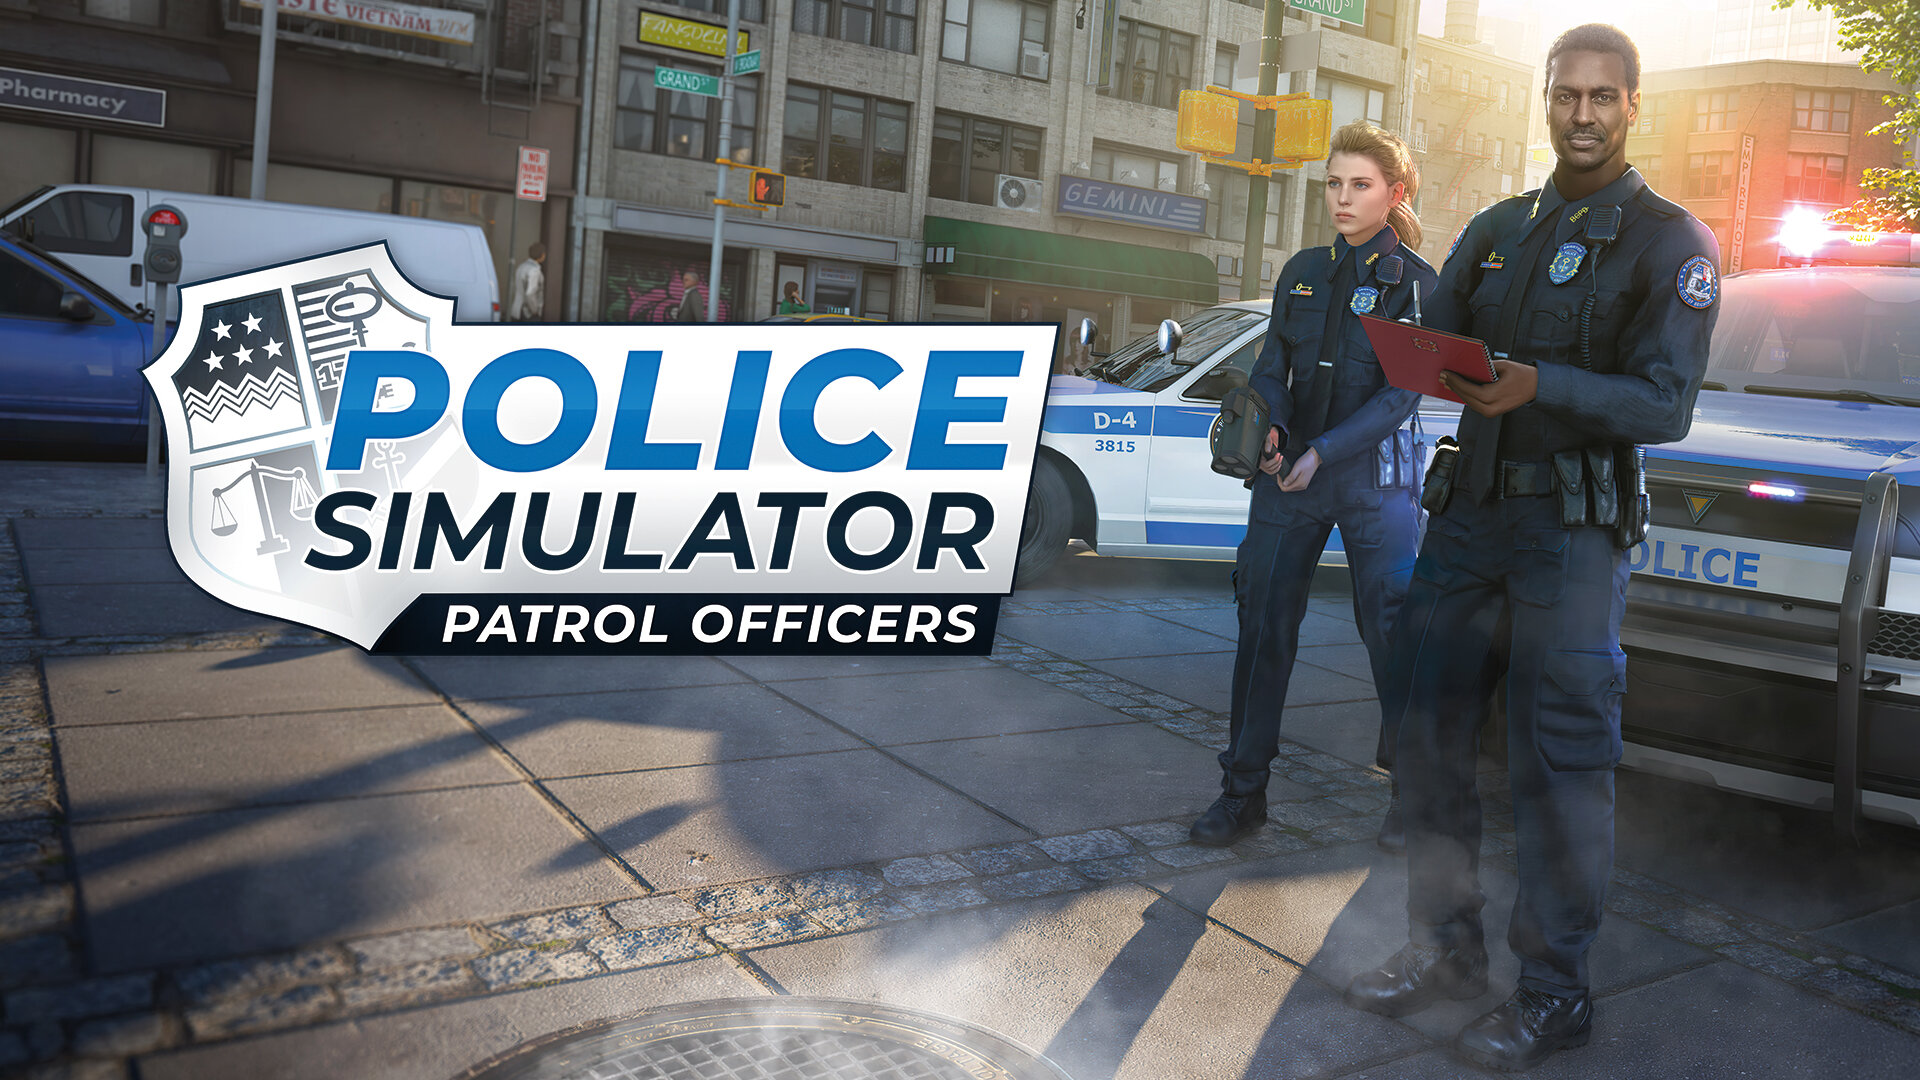 police-simulator-patrol-officers-le-jeu-de-simulation-de-policiers-arrive-sur-consoles